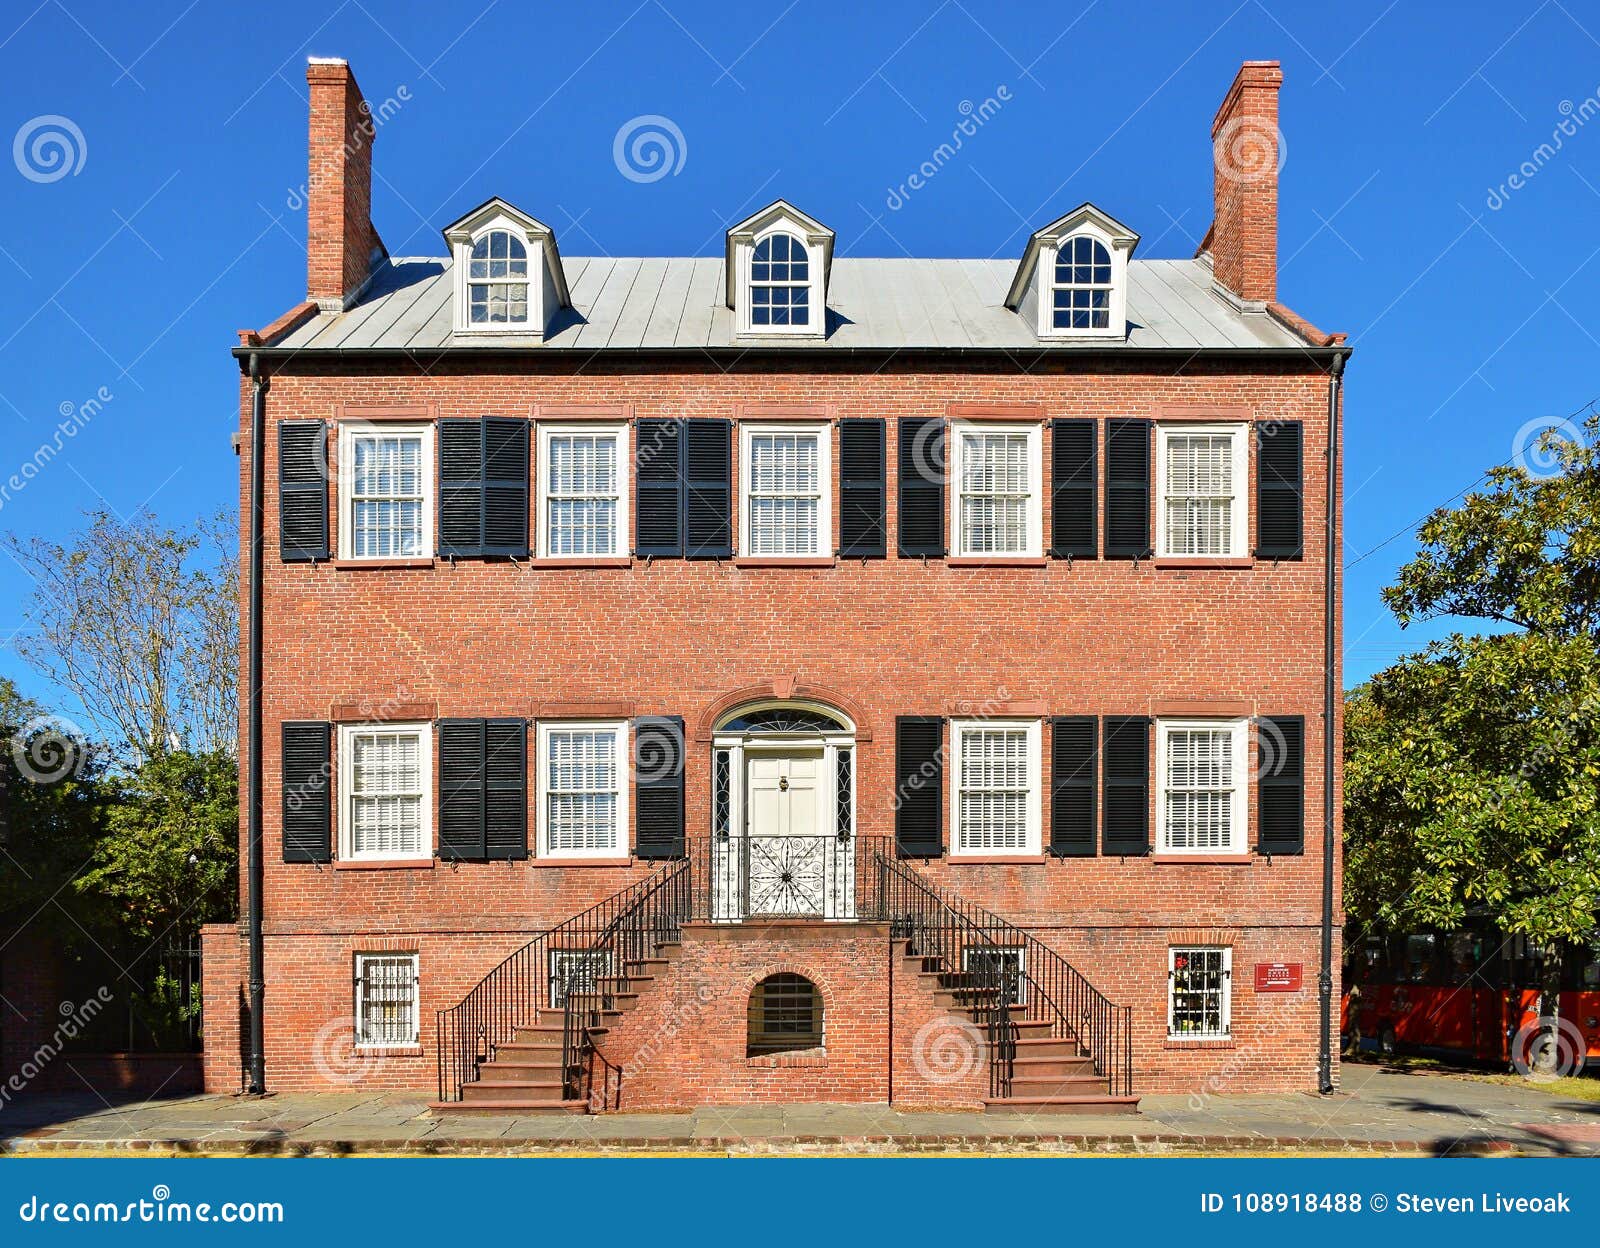 Download The Isaiah Davenport Historic House In Savannah, Georgia ...